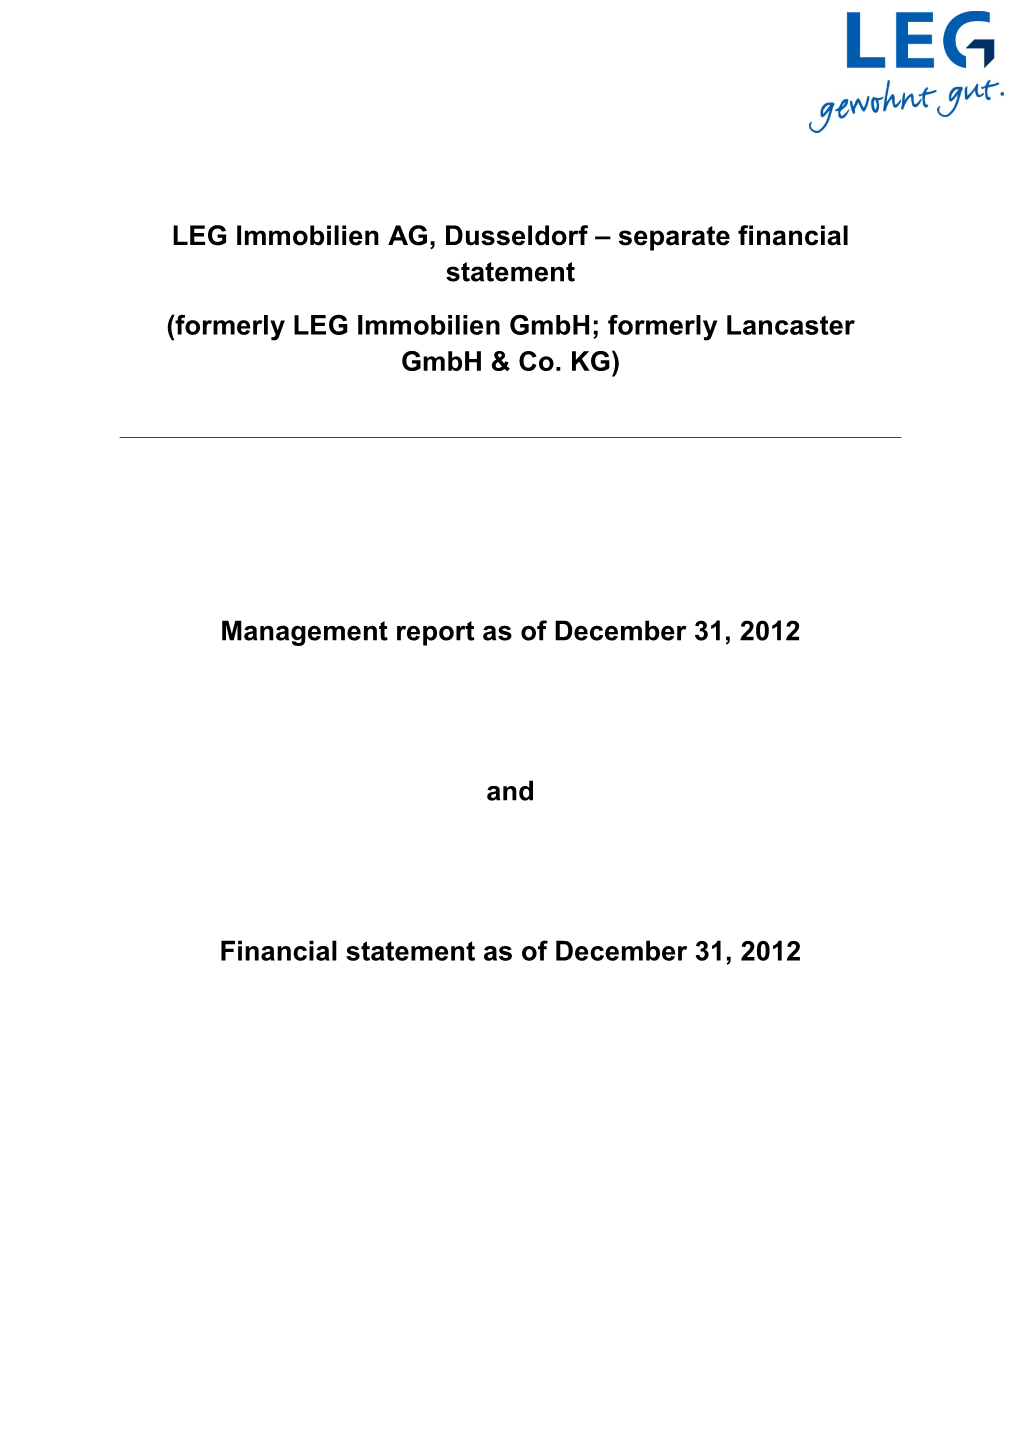 LEG Immobilien AG, Dusseldorf – Separate Financial Statement (Formerly LEG Immobilien Gmbh; Formerly Lancaster Gmbh & Co